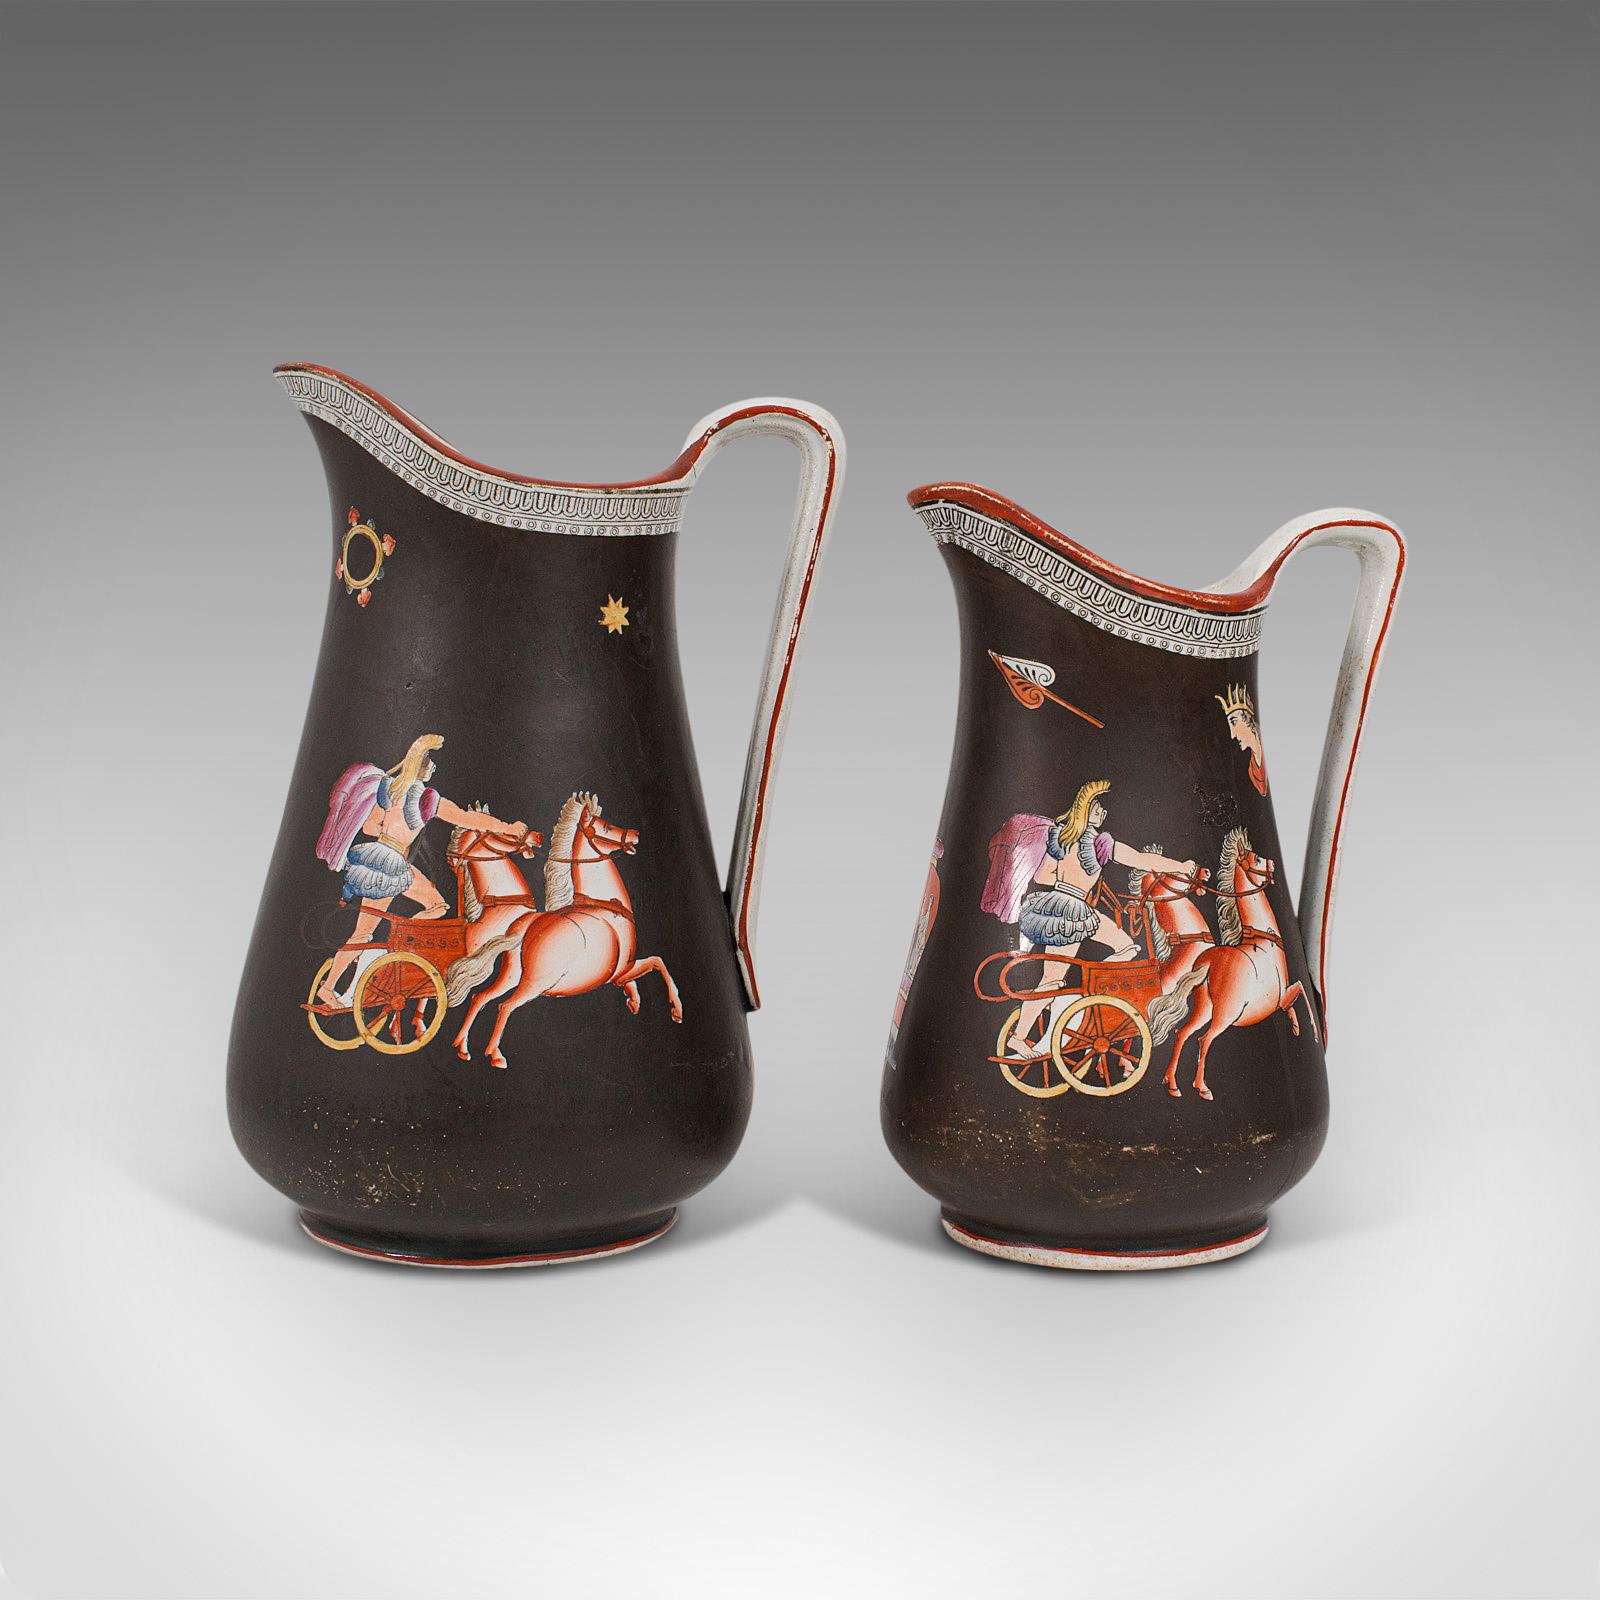 19th Century Antique Pair, Decorative Pouring Jugs, English, Ceramic, Serving Ewer, Victorian